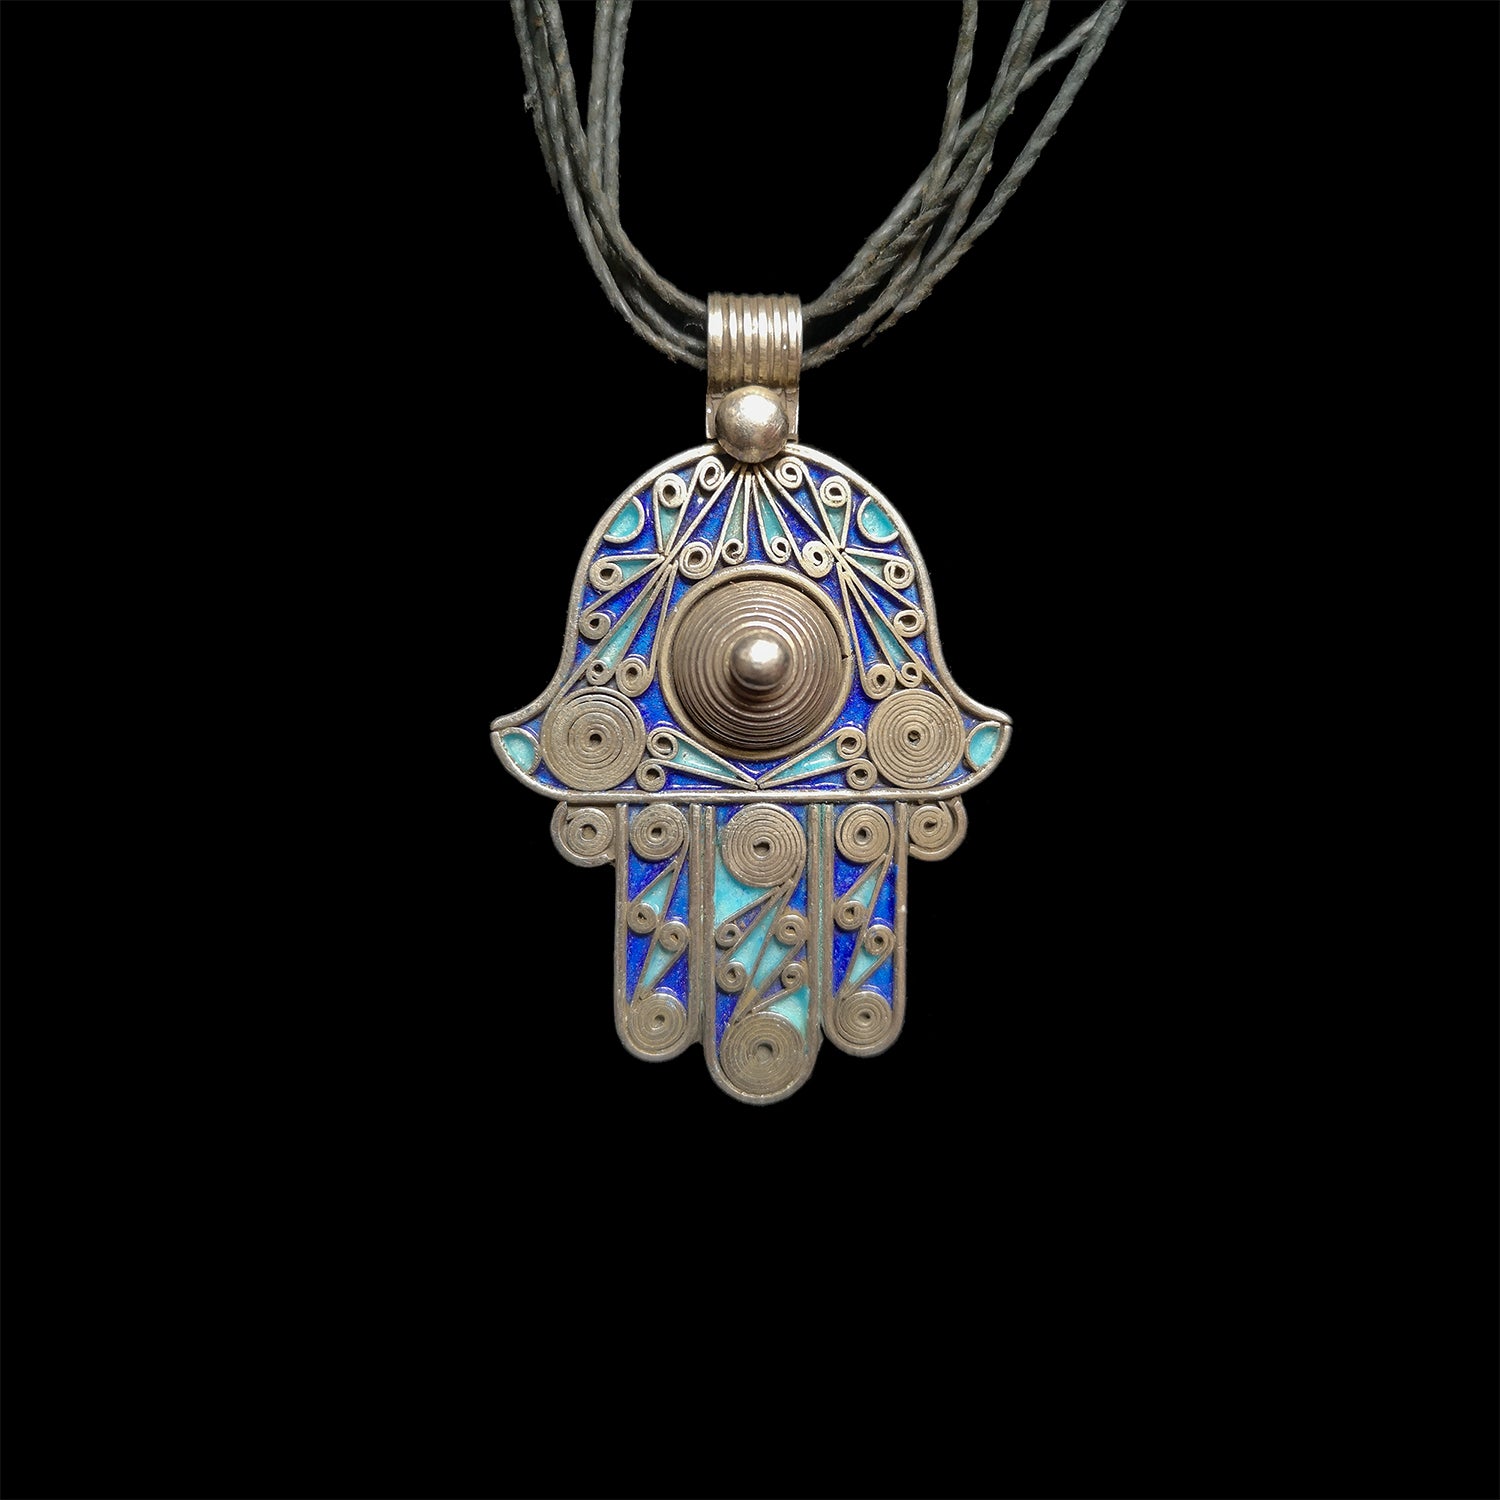 Silver and enamel khamsa pendant from Tiznit, Morocco - medium